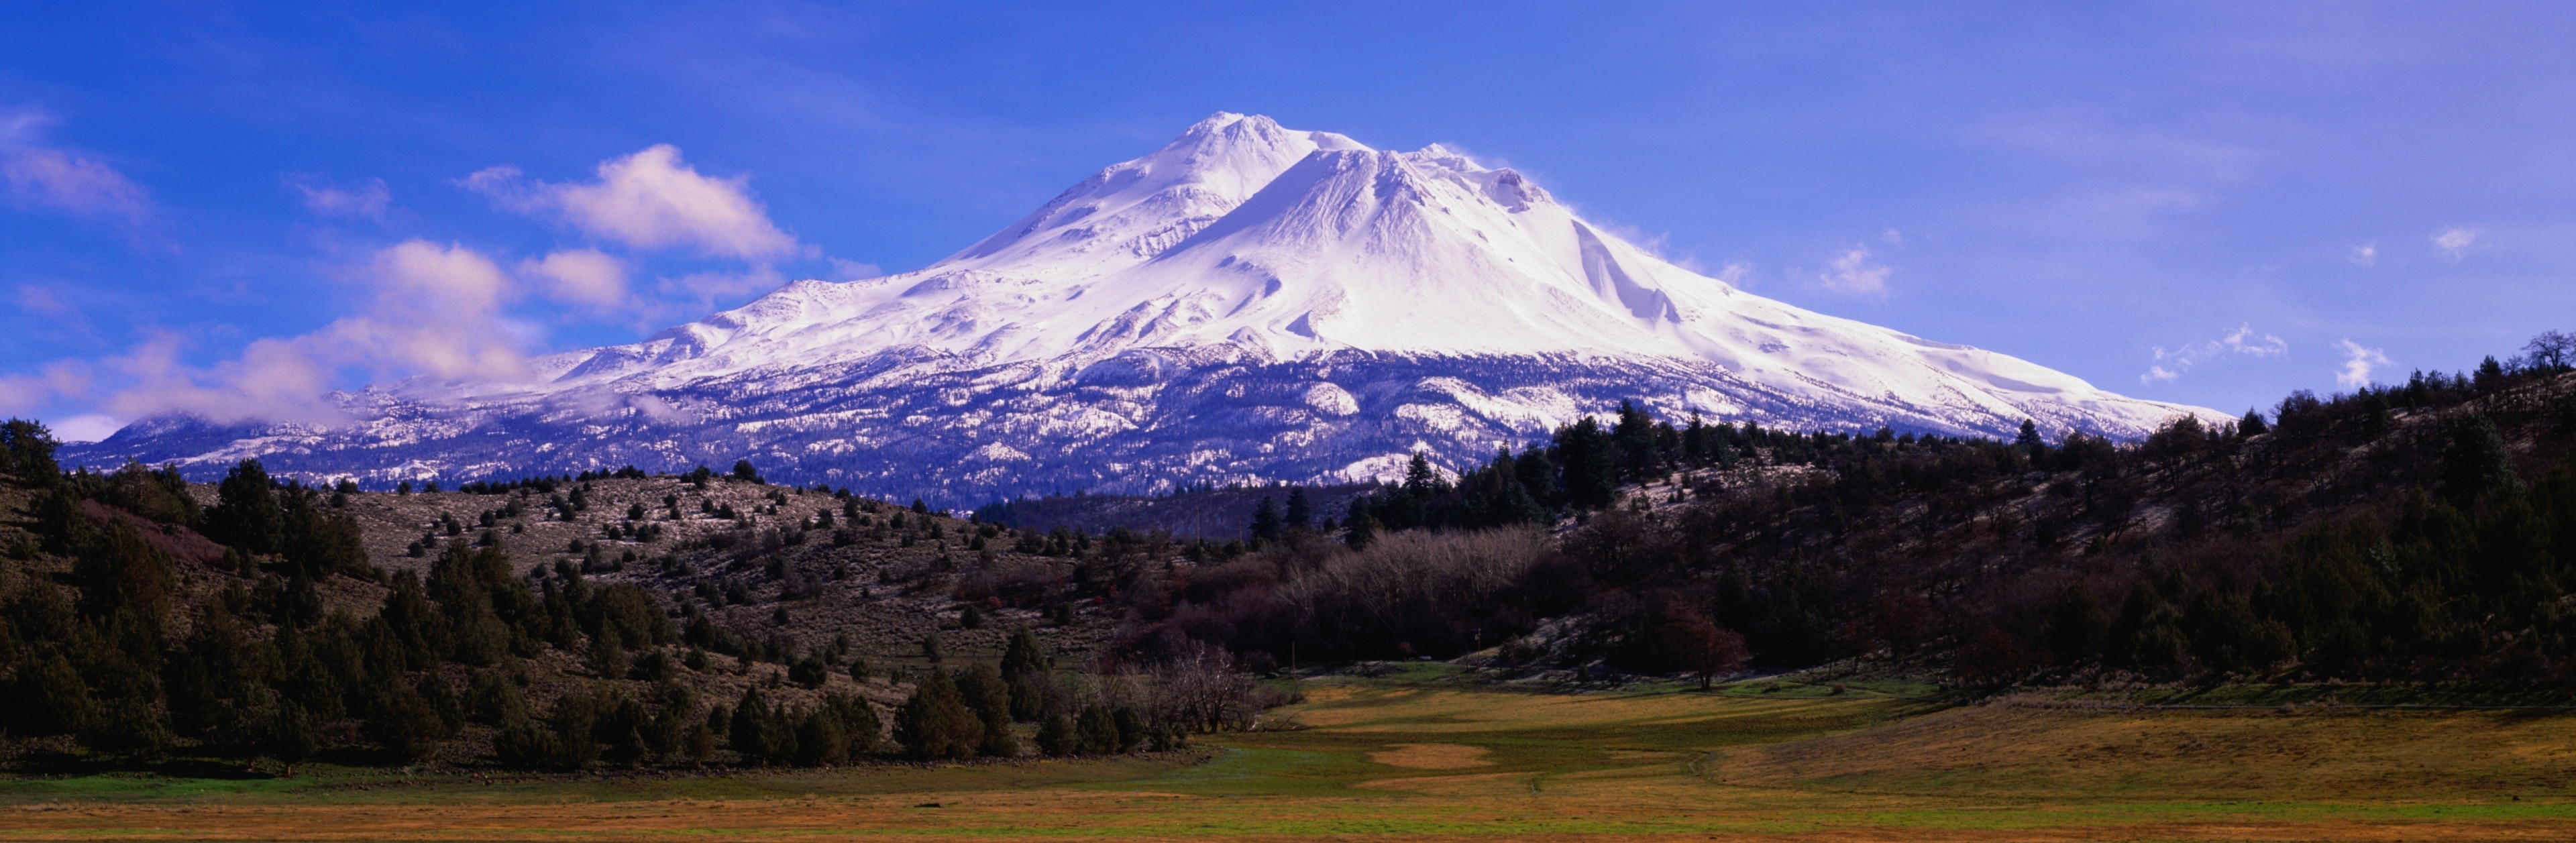 Mount Shasta, Siskiyou County, California, United States of America